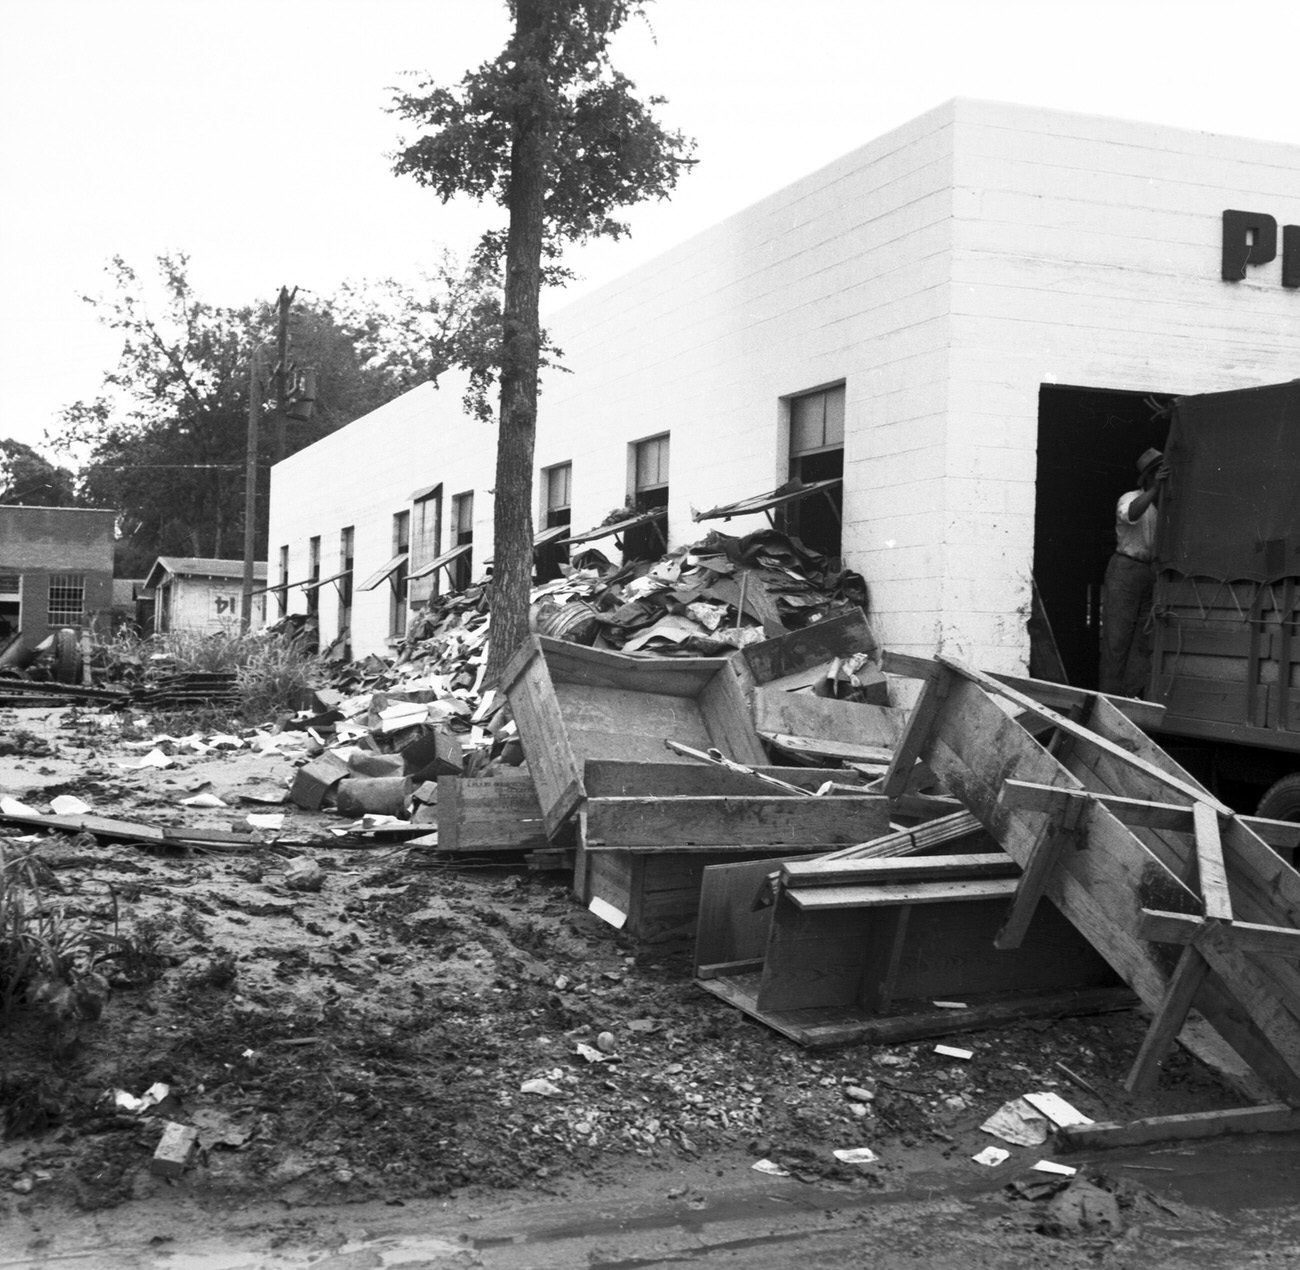 Debris on the side of a building after flood, 1949